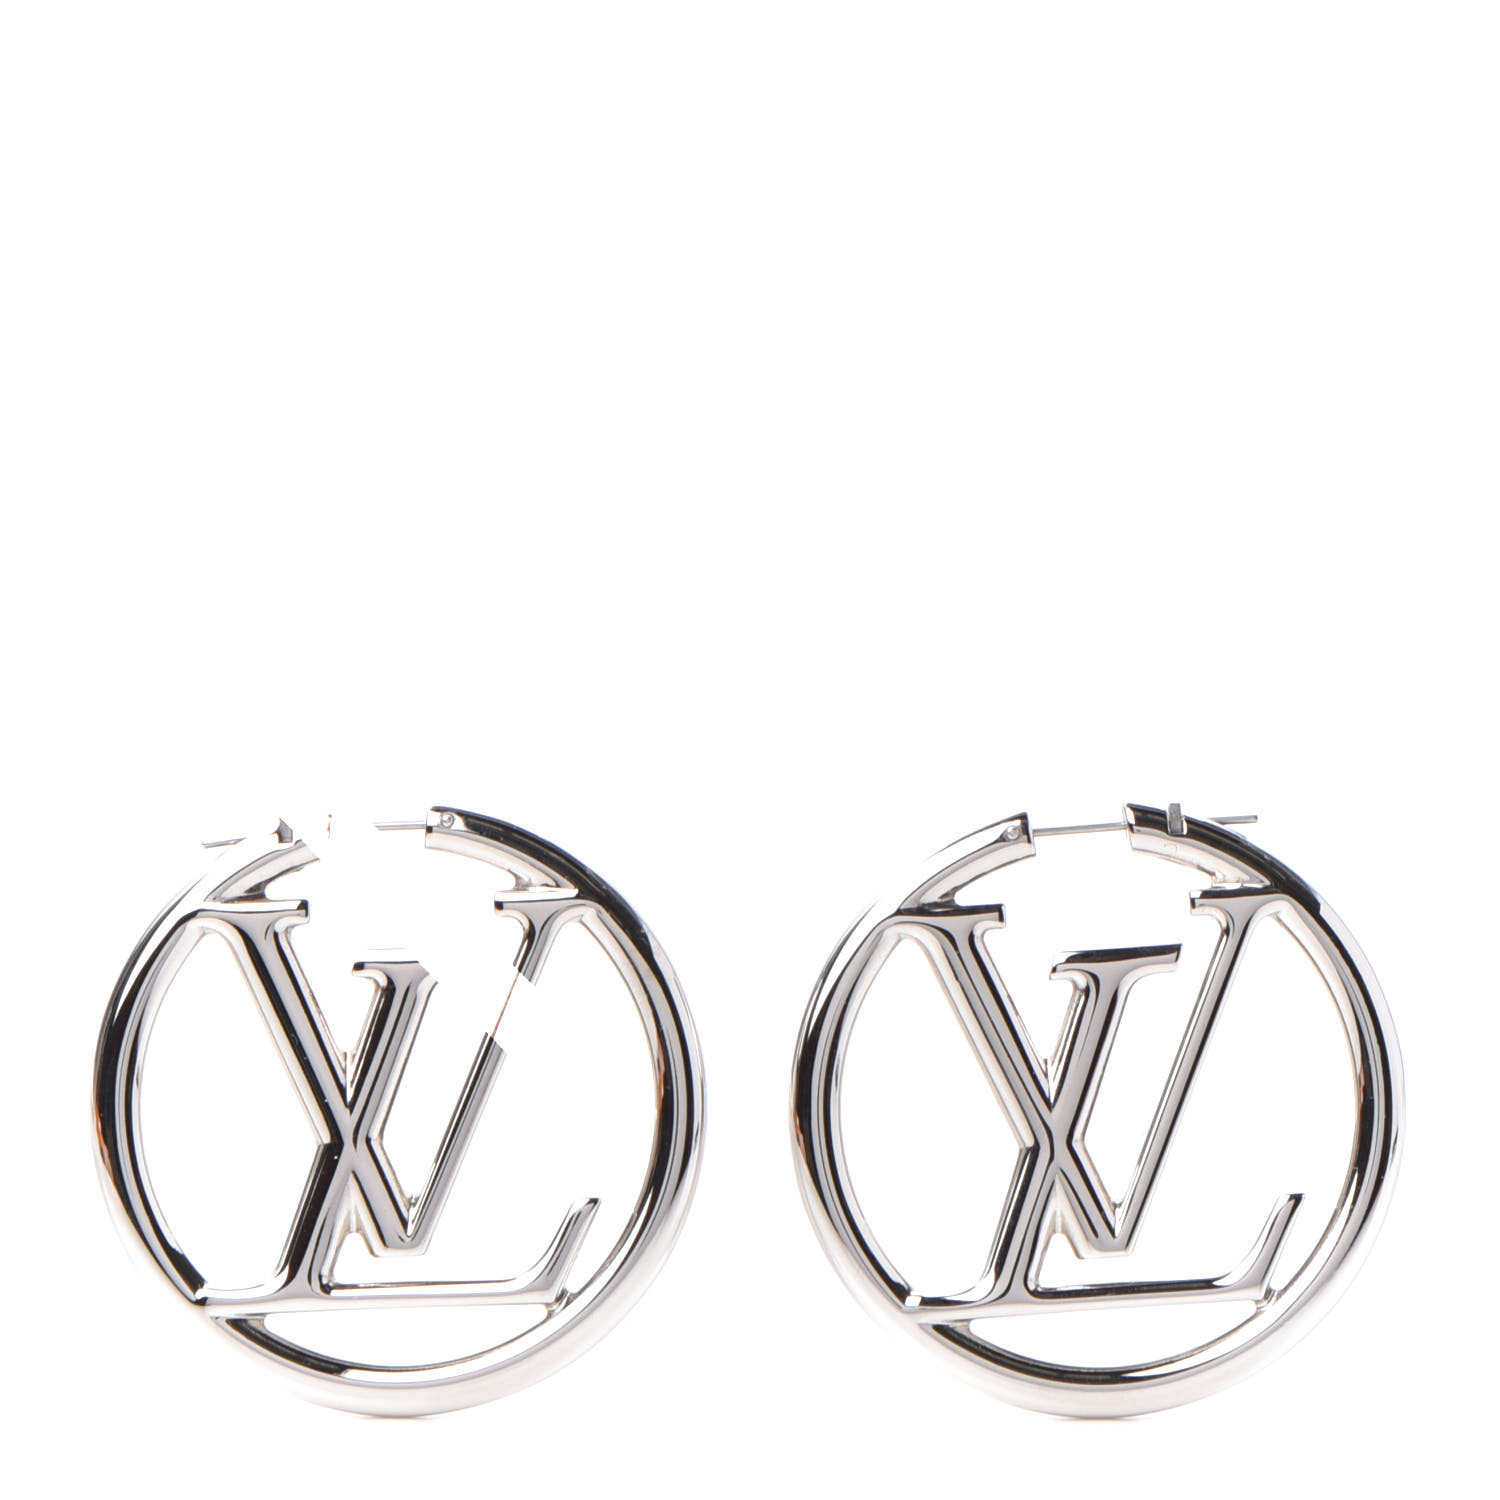 Shop Louis Vuitton Louise hoop earrings (M80136, M64288) by